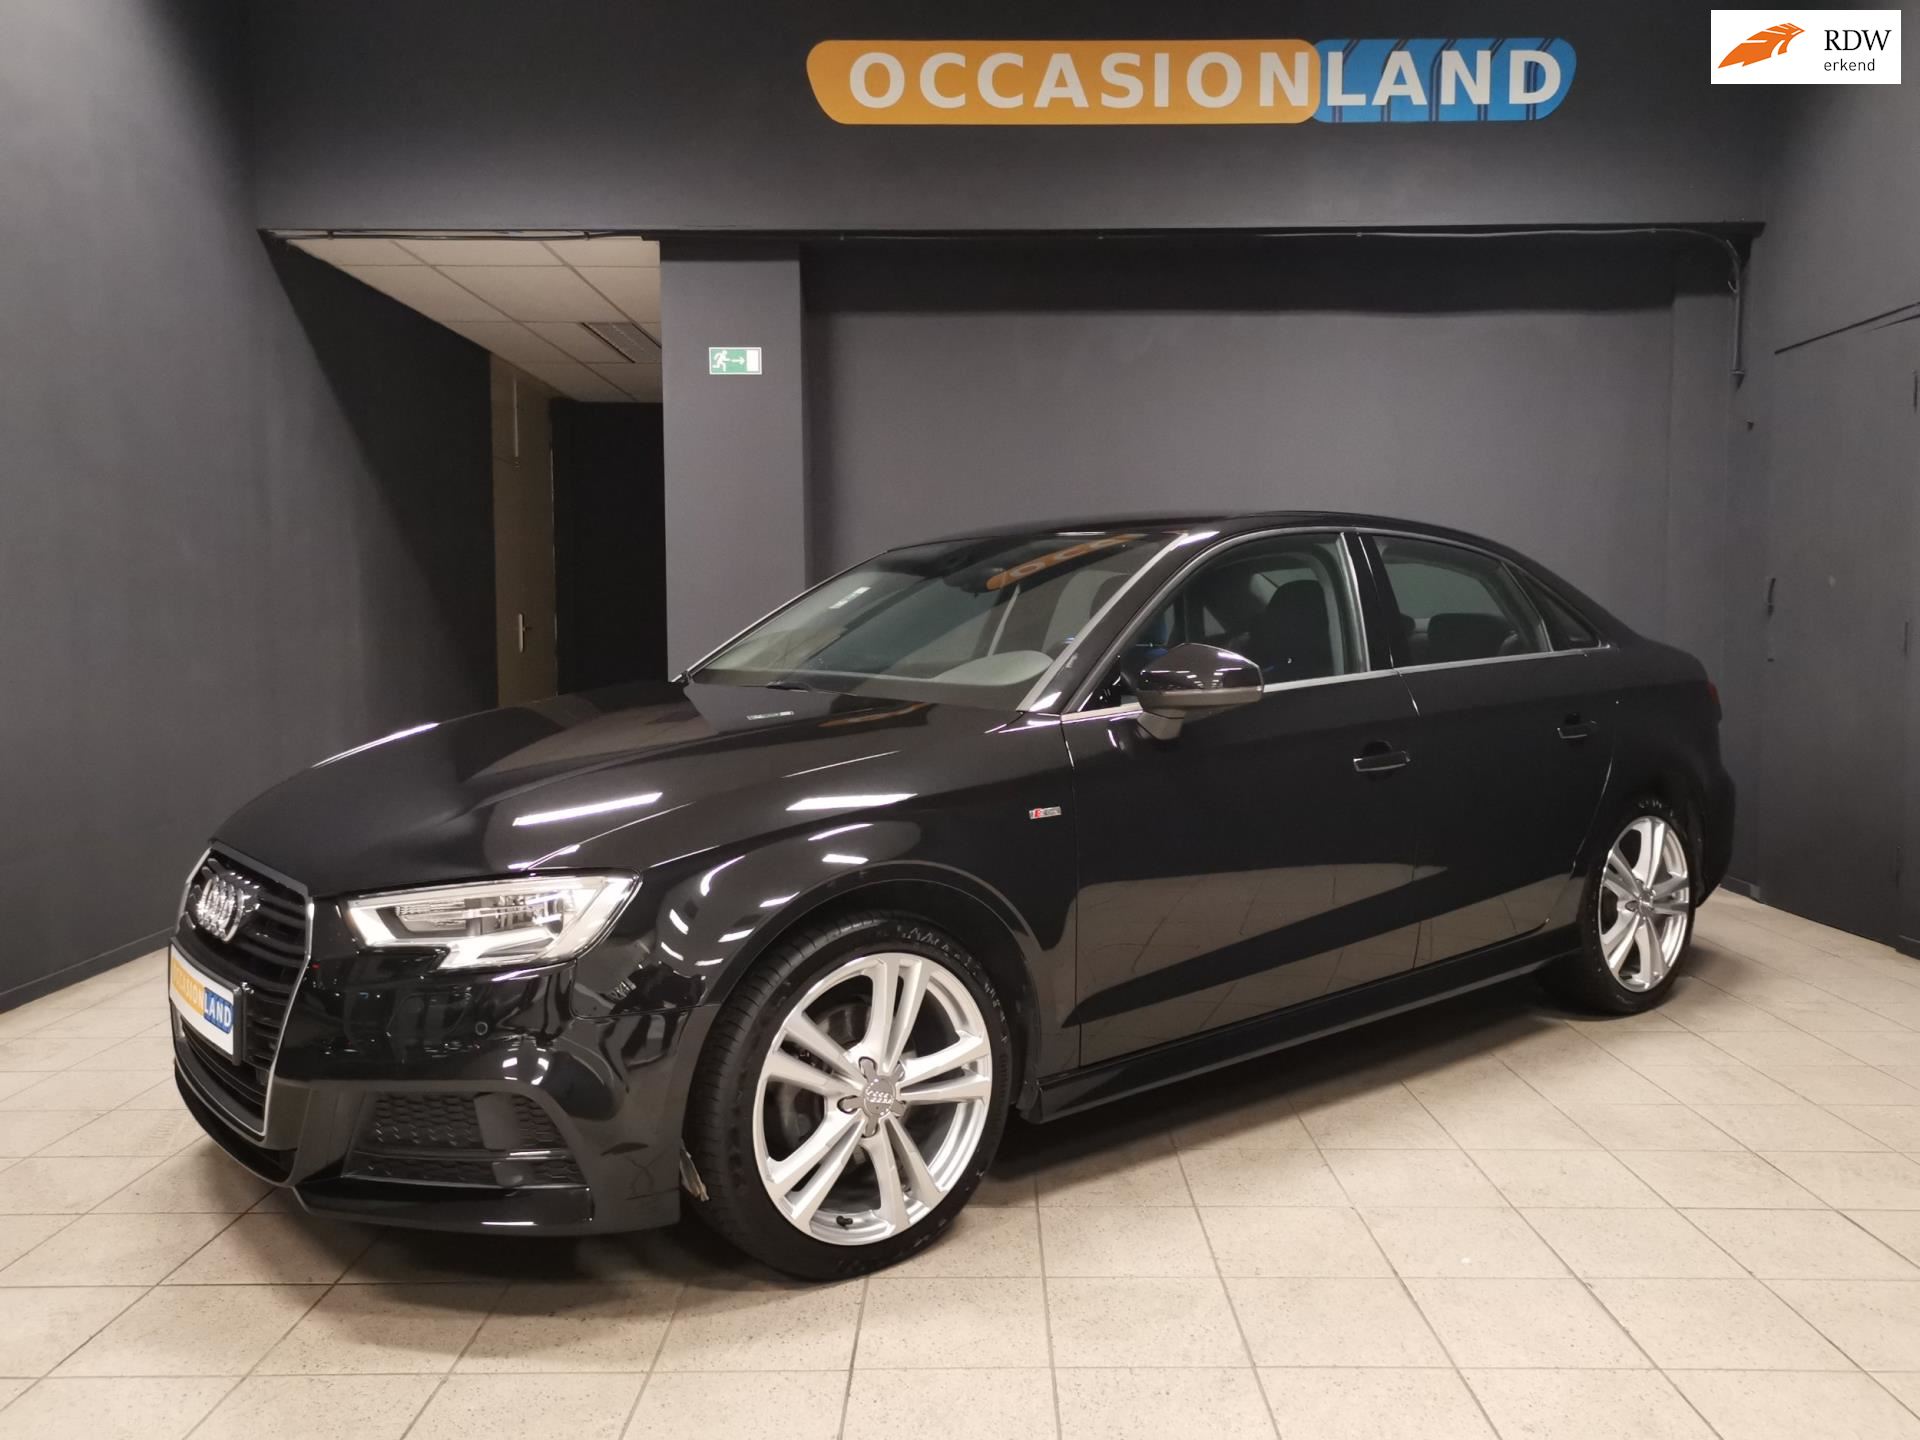 Audi A3 Limousine occasion - Occasionland